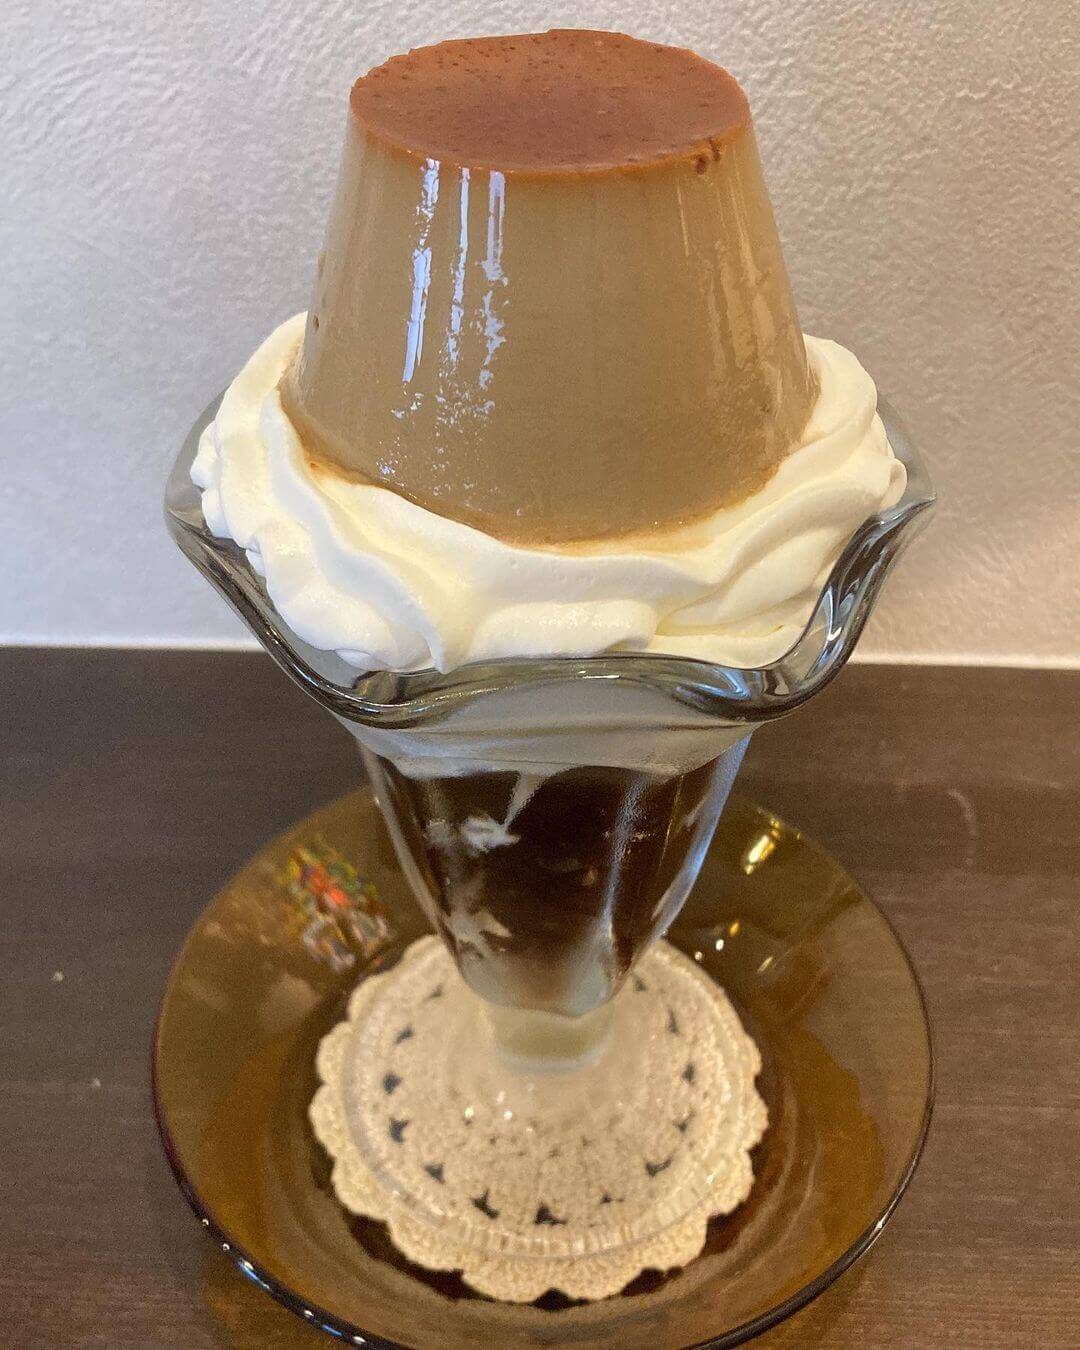 pudding maruyamaの『珈琲ゼリーパフェ』が